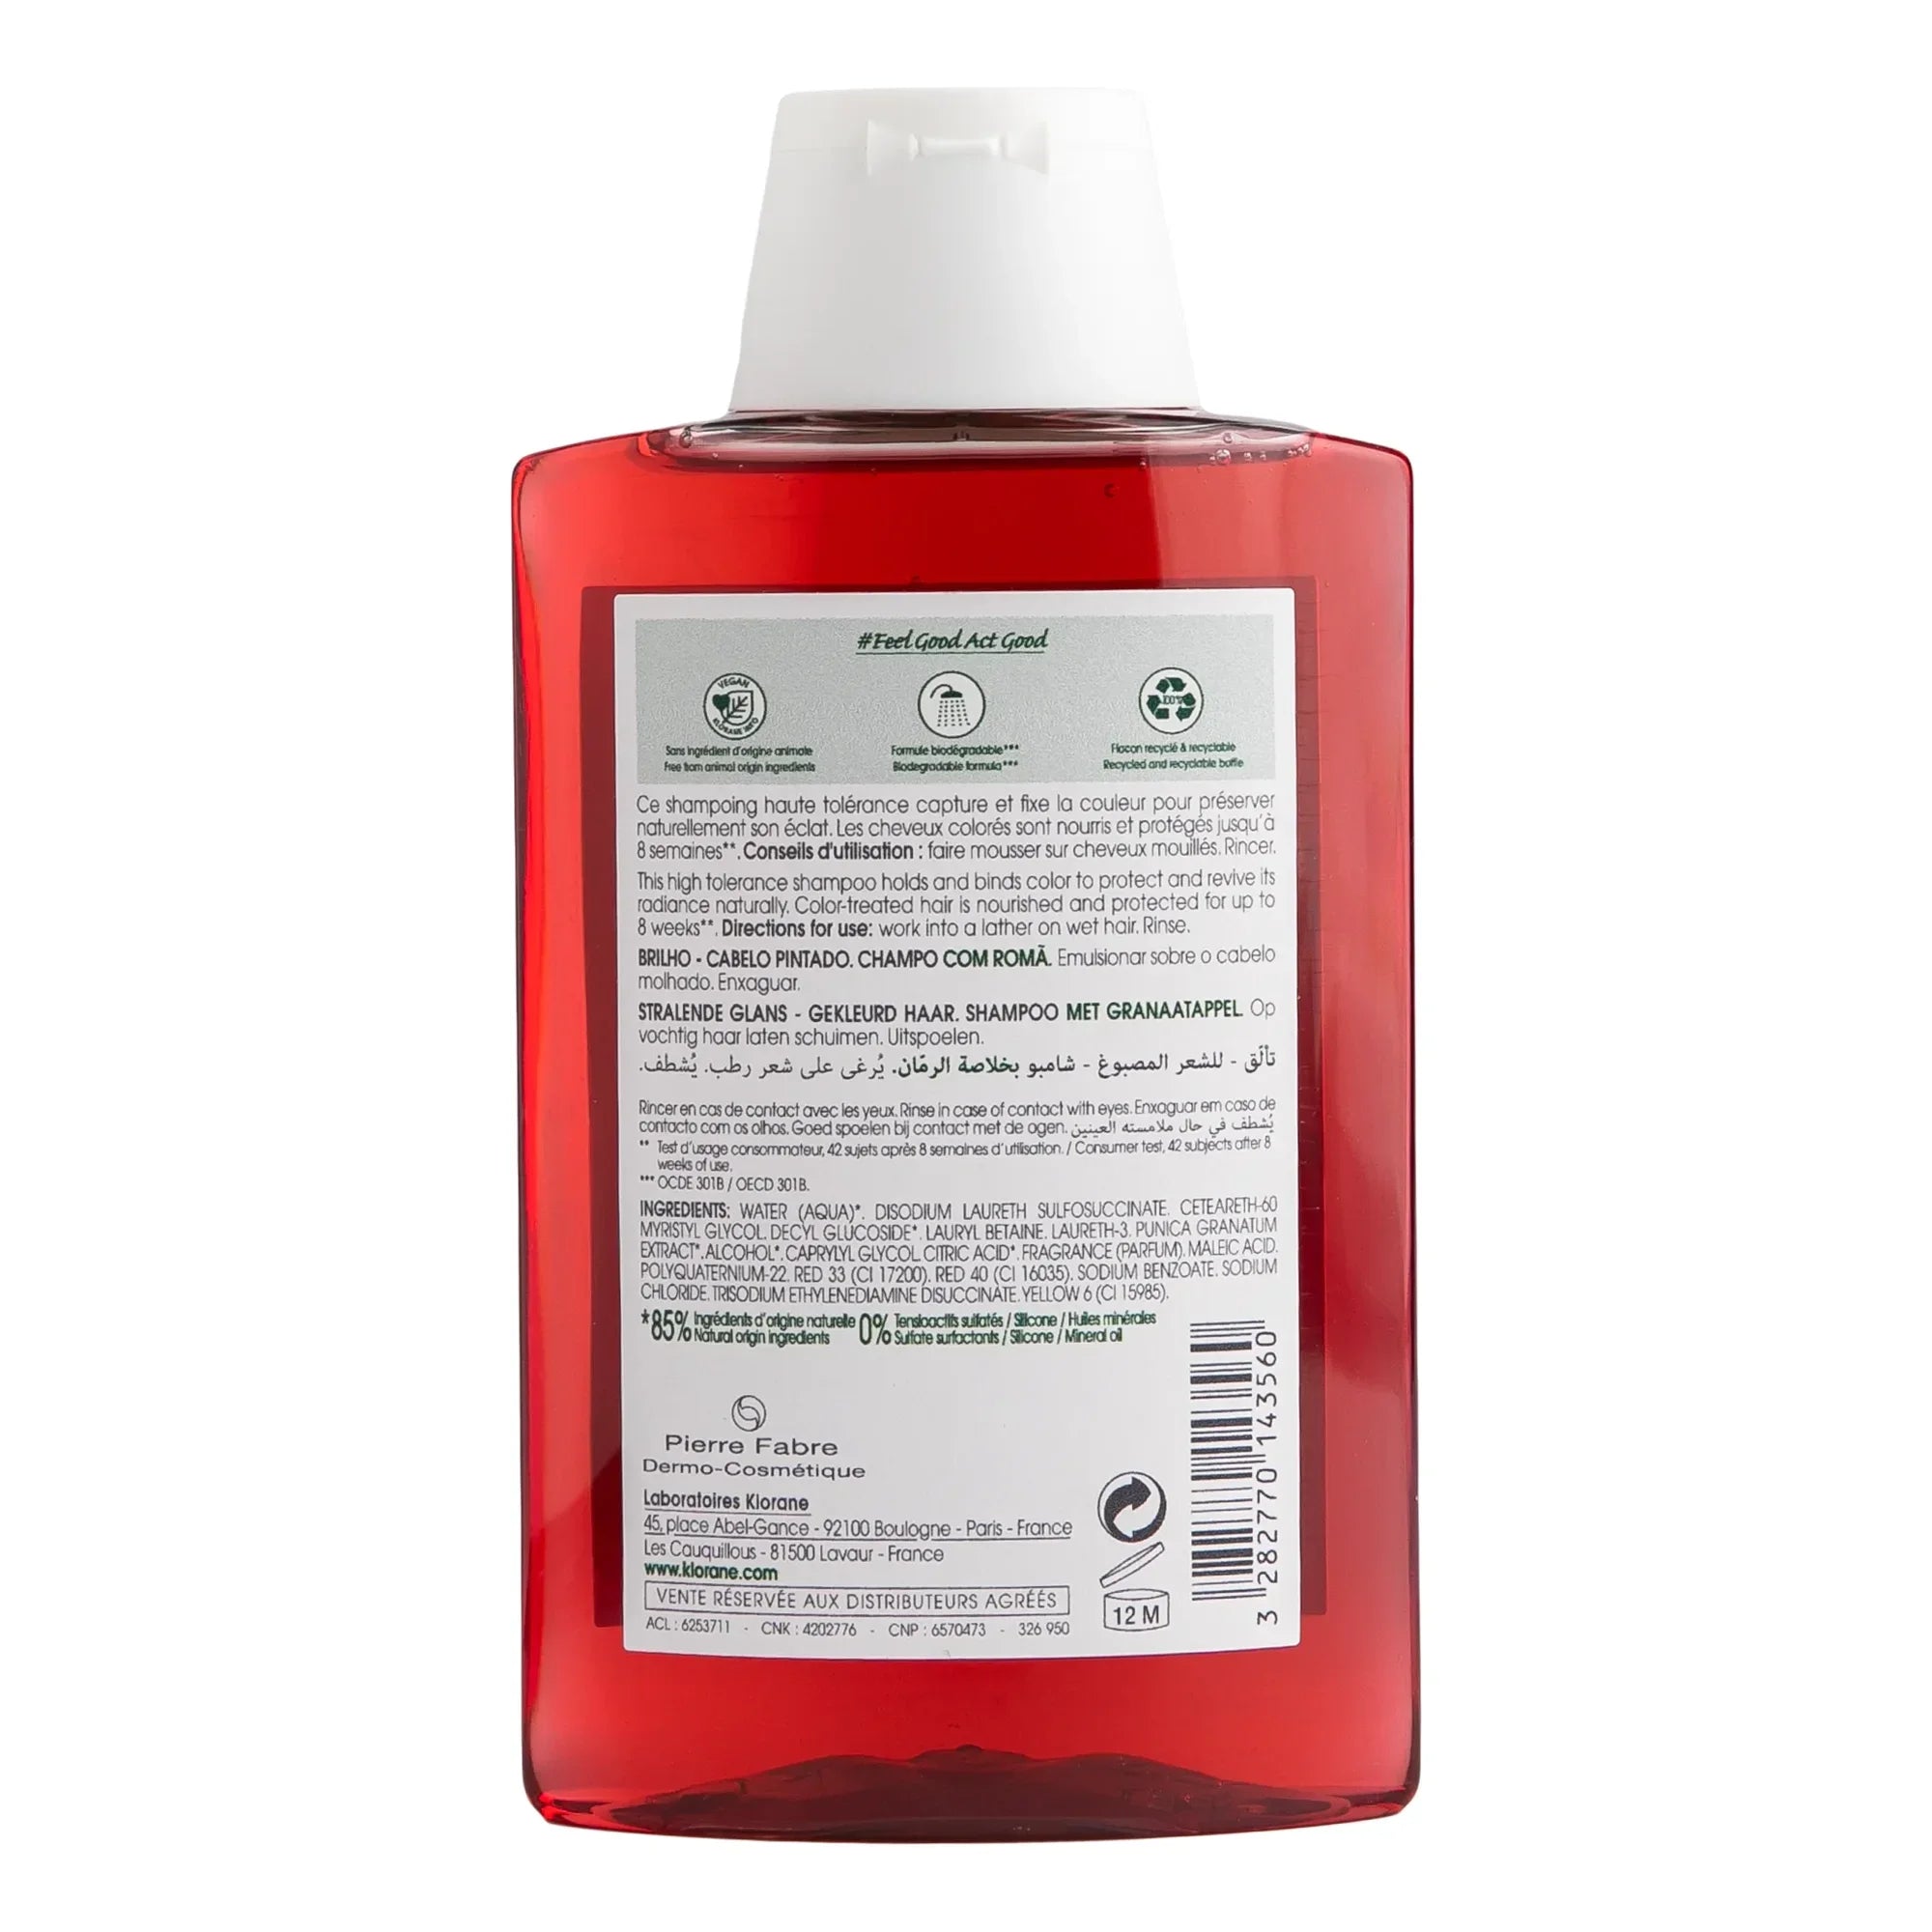 Shampoo with Pomegranate Color-Treated hair